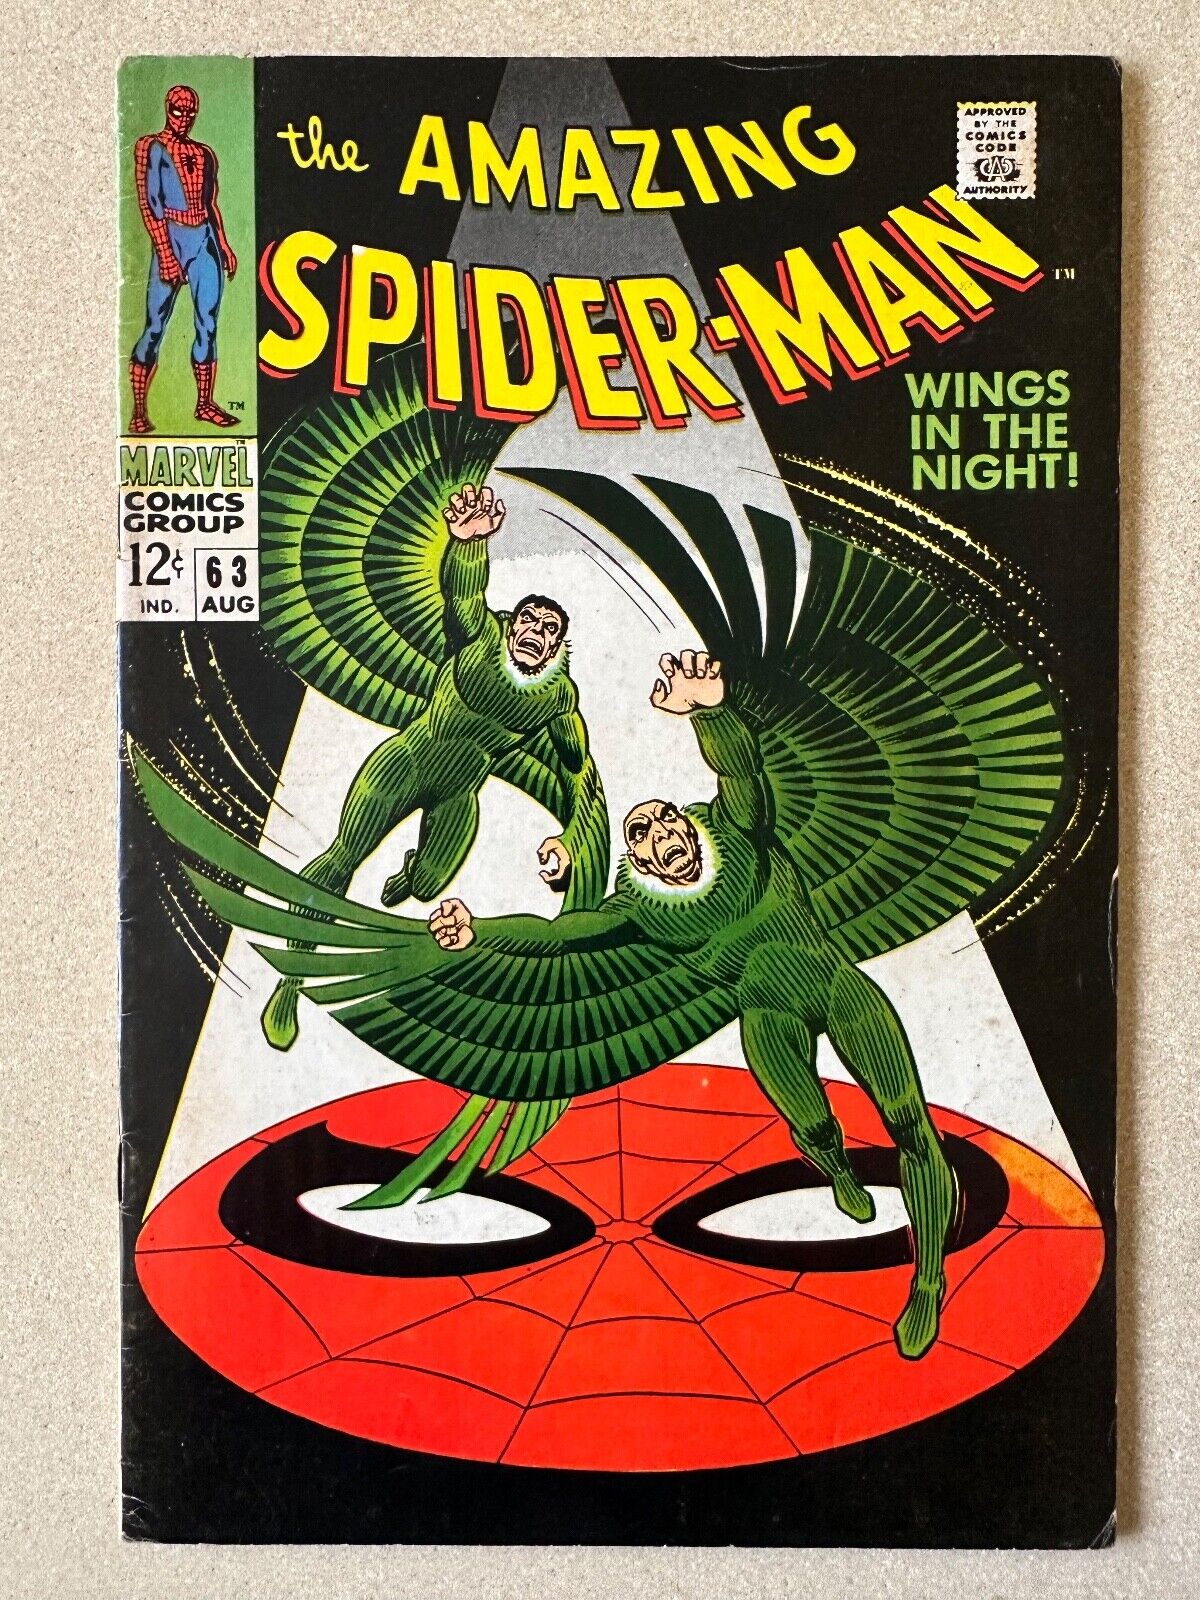 The Amazing Spider-Man #63 1968 5.5 FN- Vulture Romita MARVEL MCU Avengers